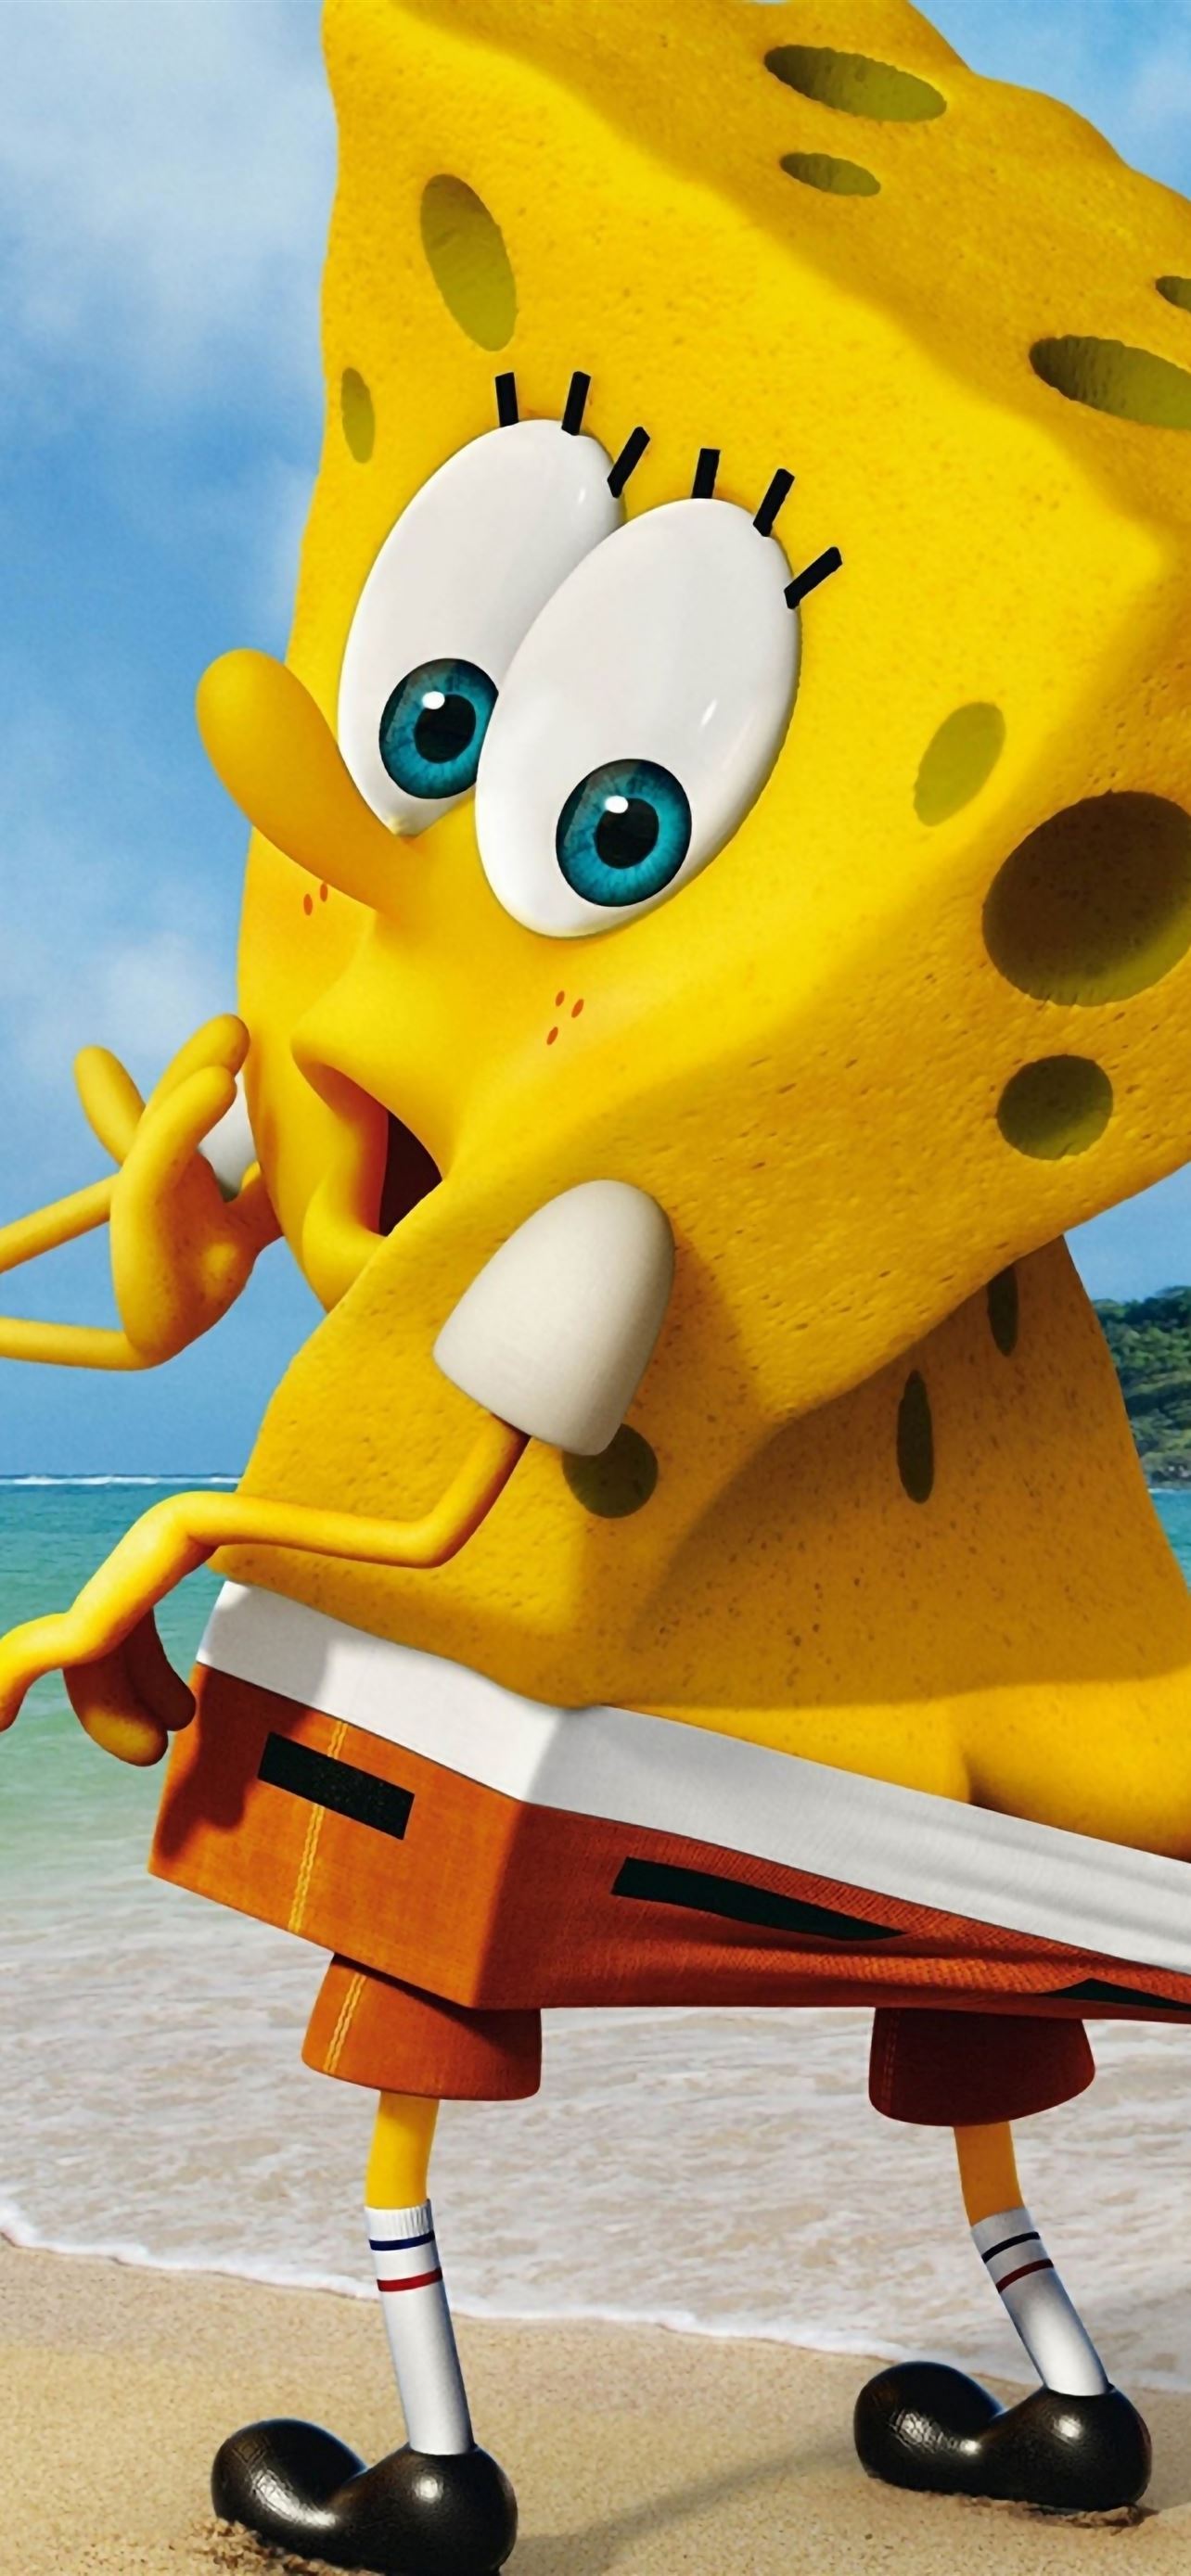 Funny Spongebob  Squarepants iPhone se Wallpaper  Download 